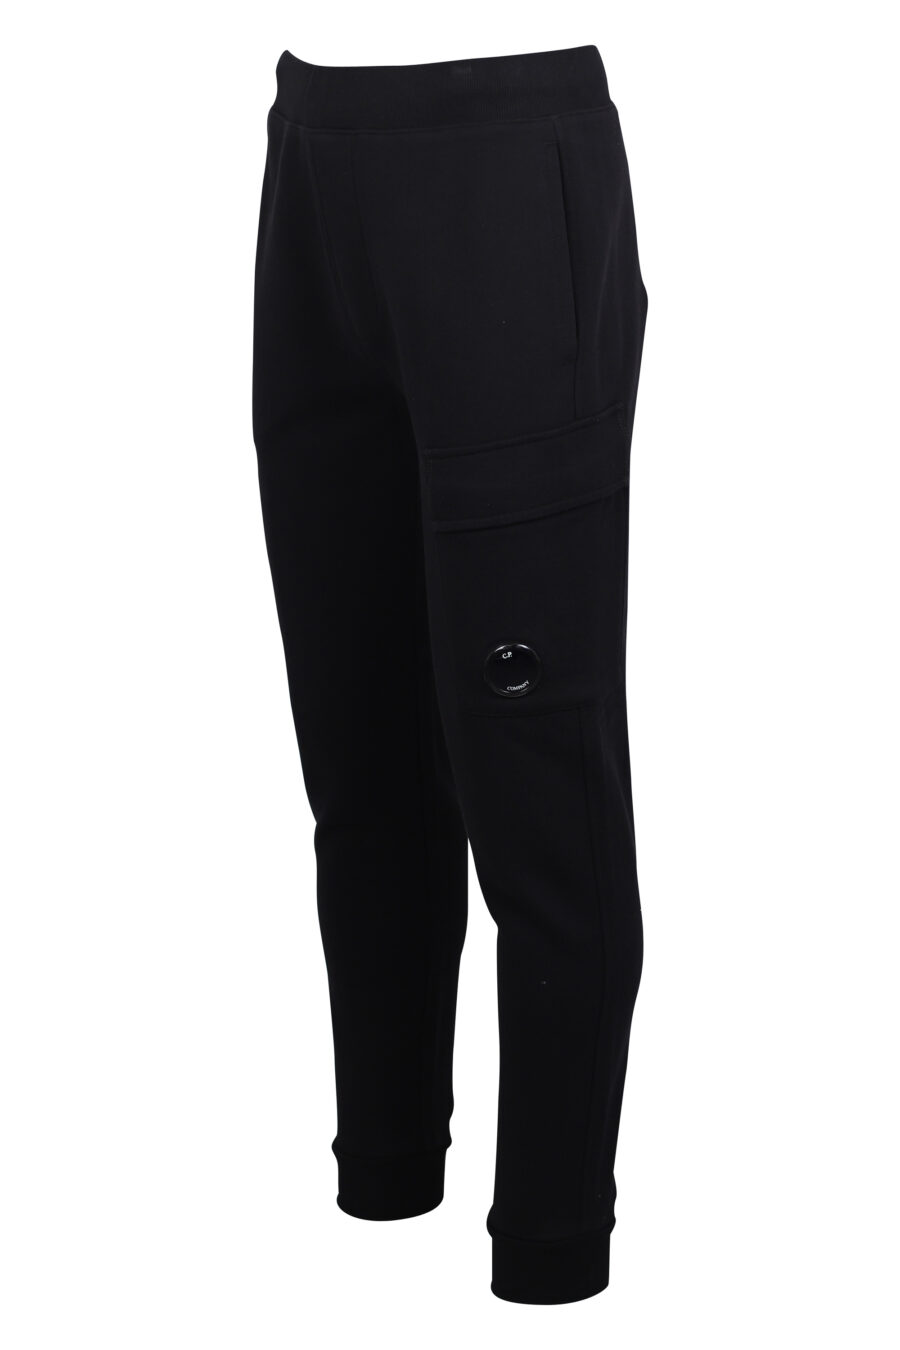 C.P. Company - Pantalón corto negro con bolsillos laterales y minilogo  circular - BLS Fashion